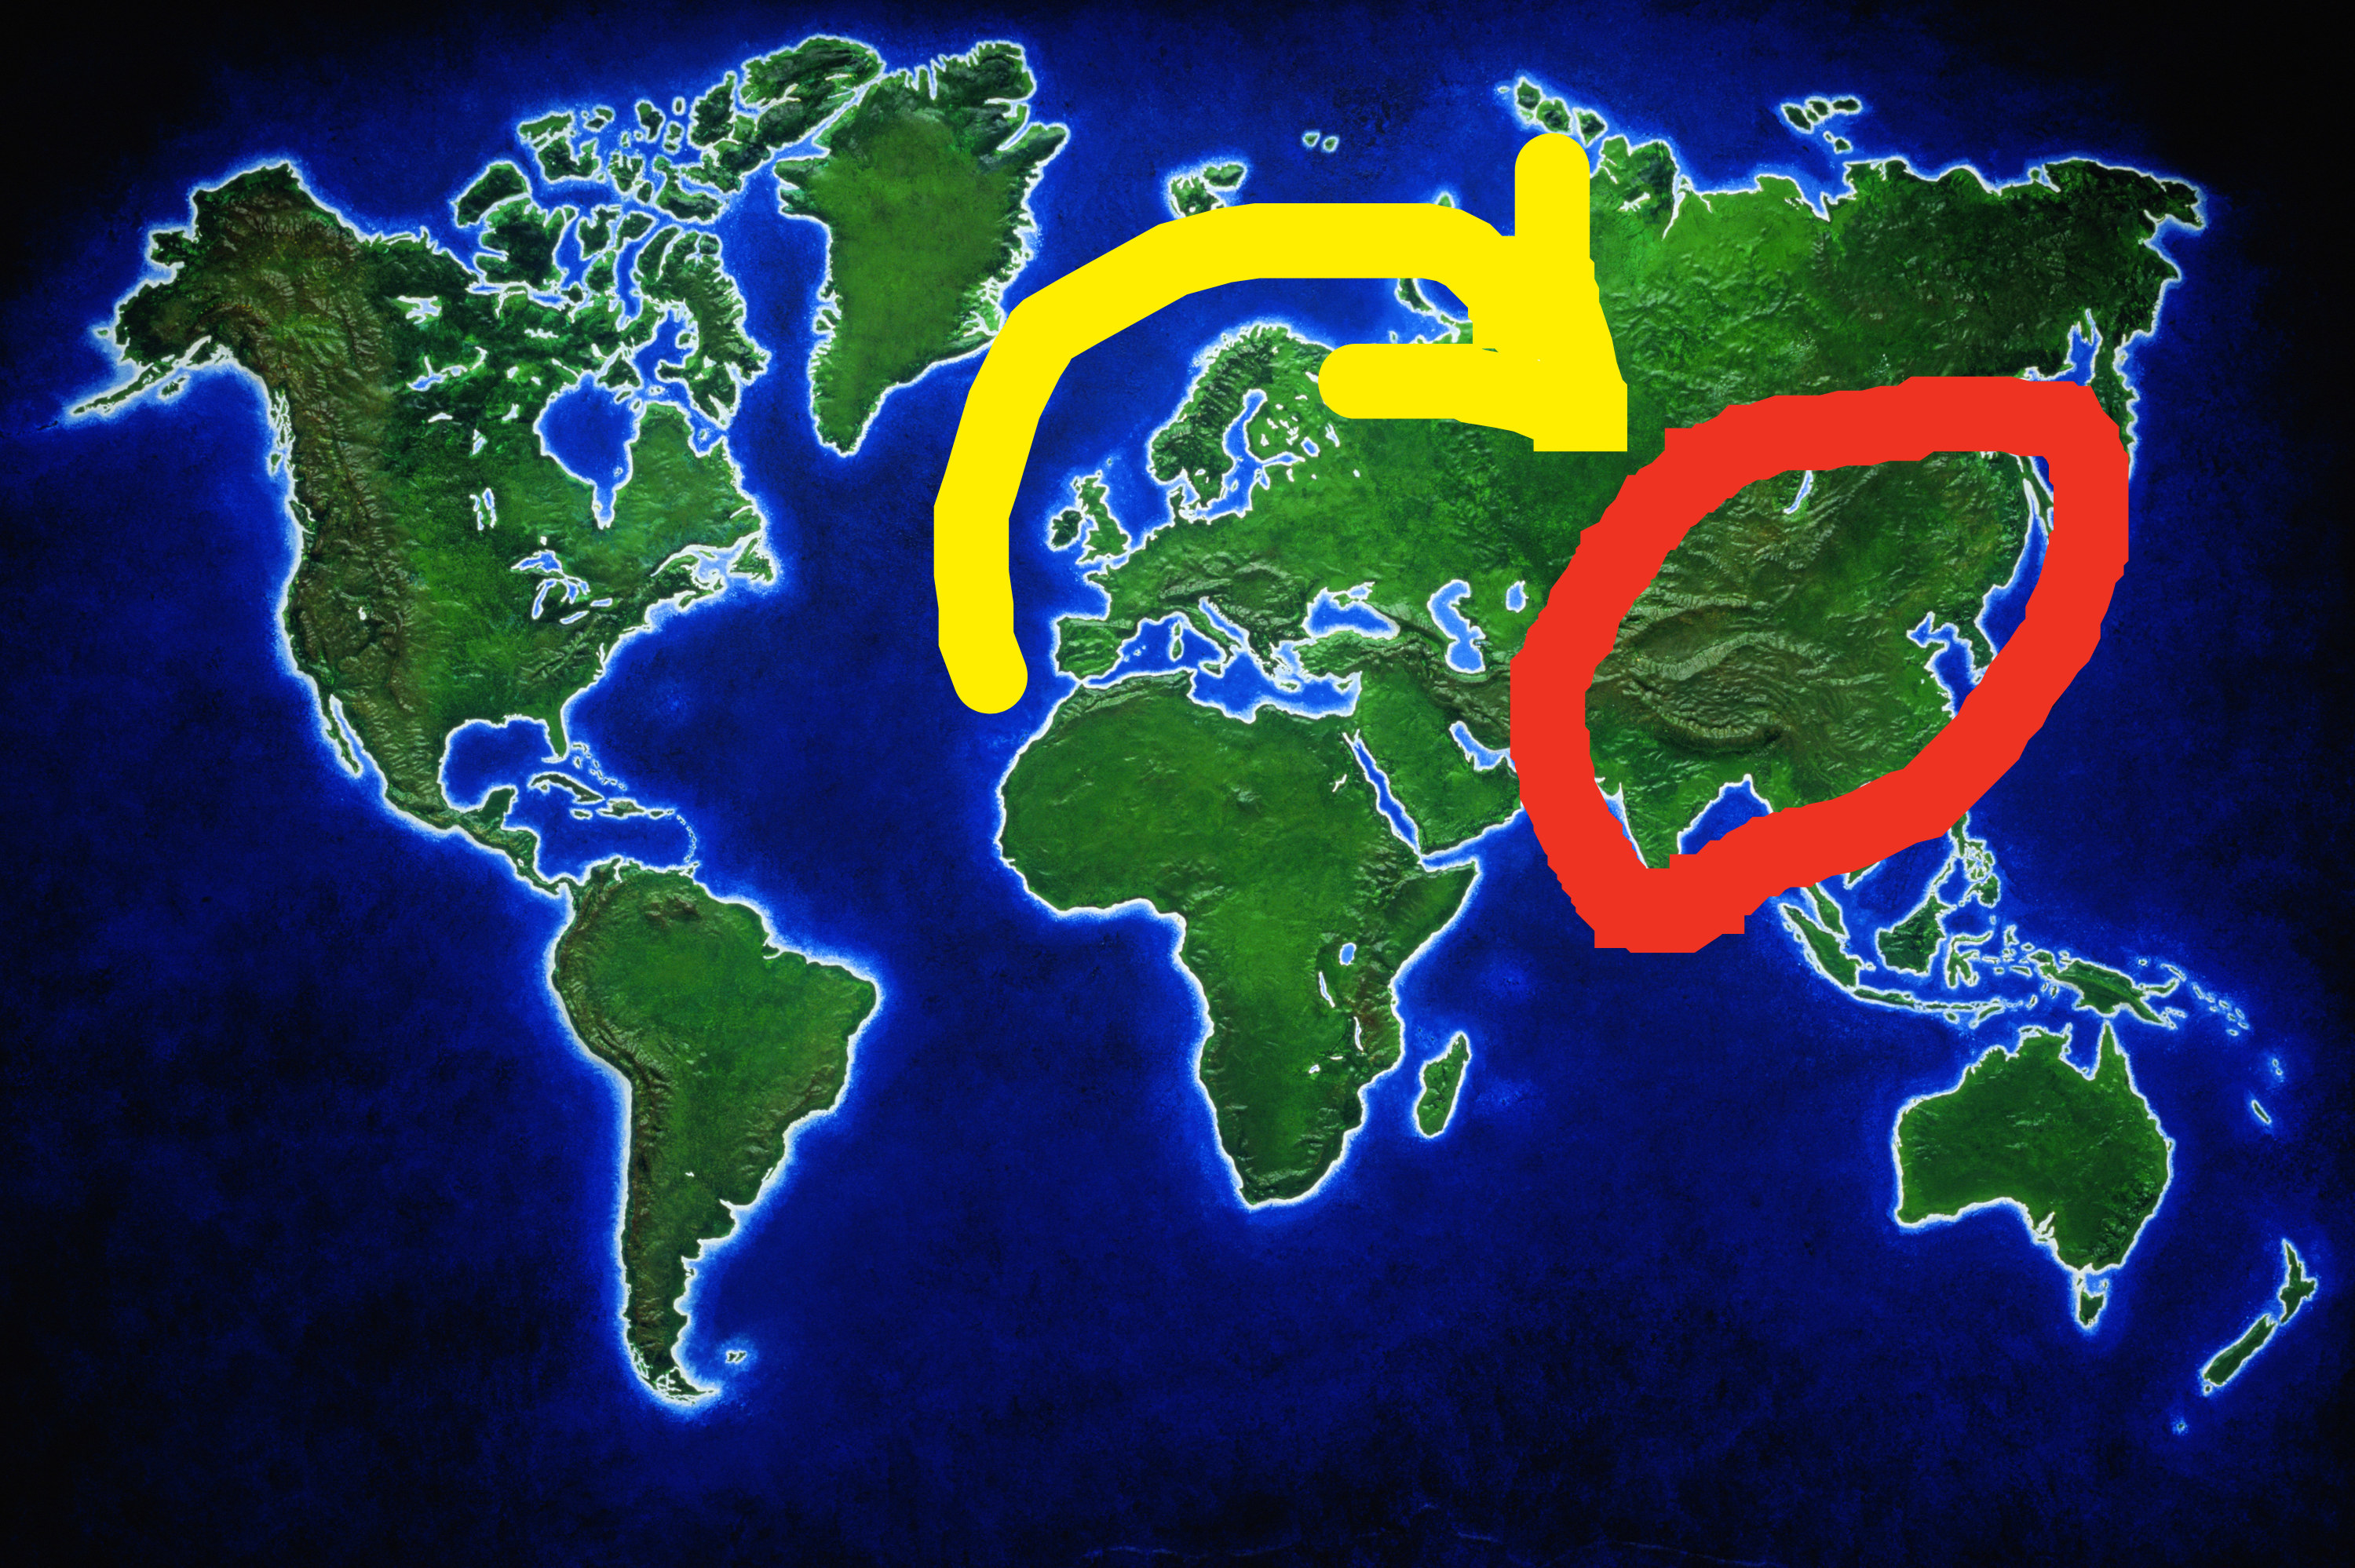 India and China circled on a world map